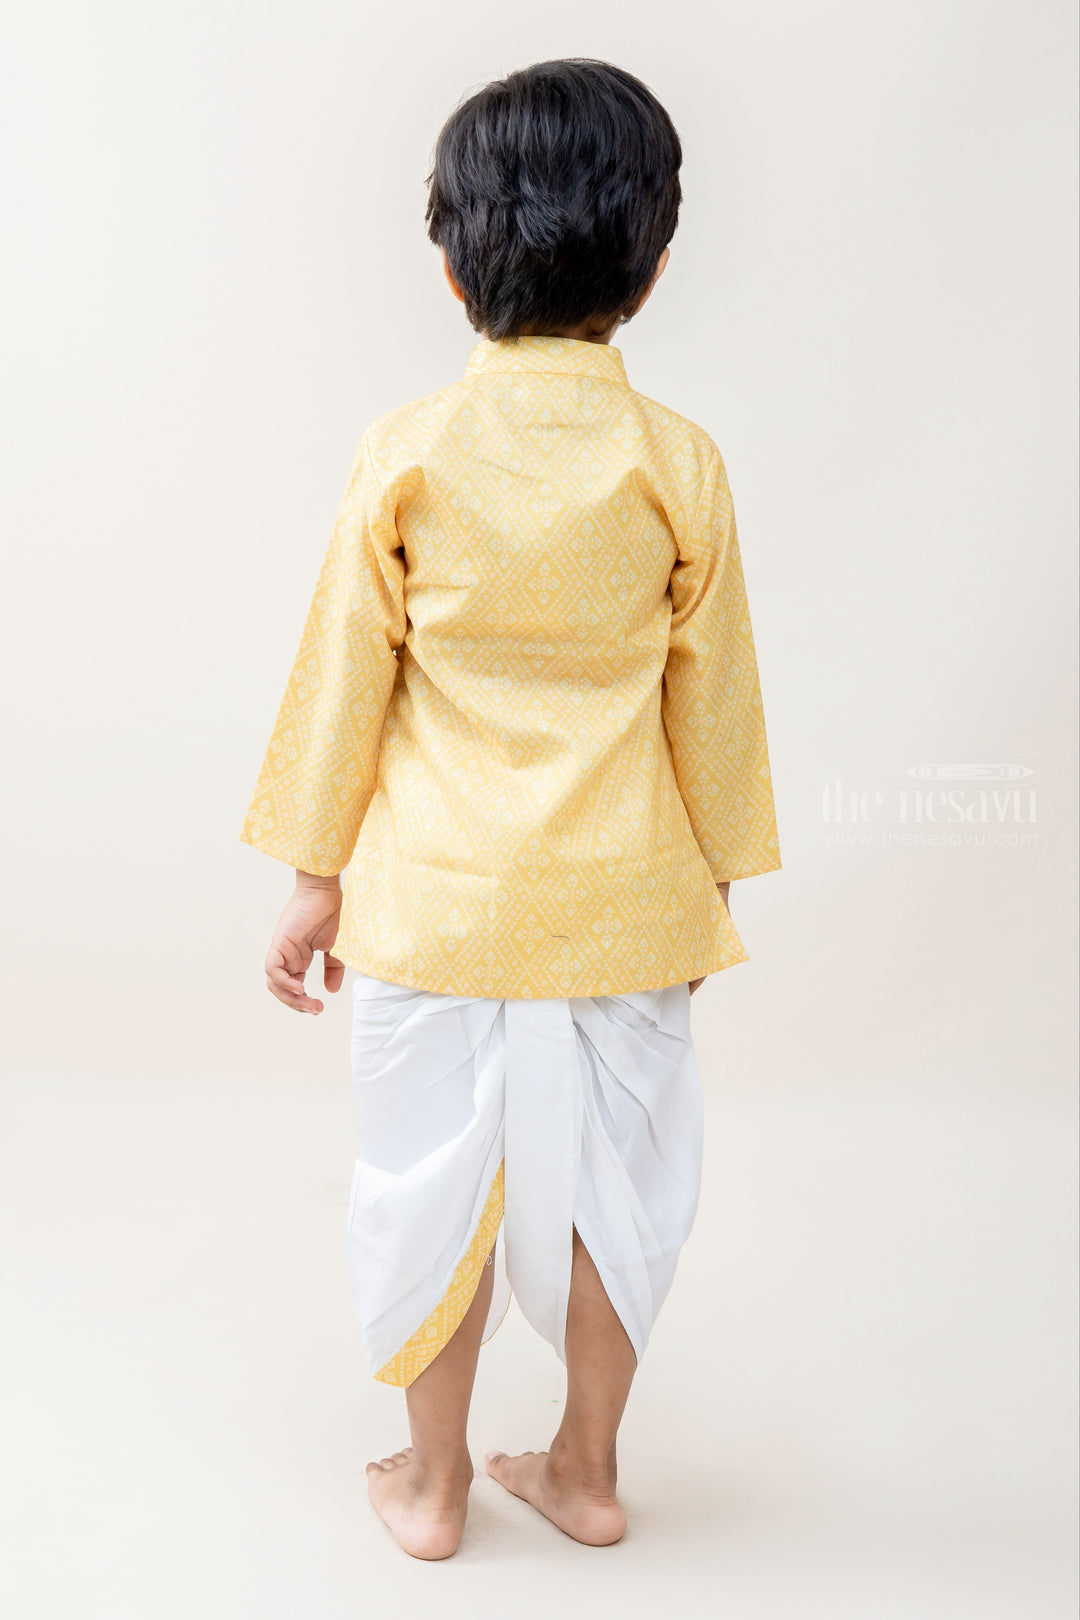 The Nesavu Ethnic Sets Forever Diagonals - Golden Yellow Kurta With White Panchakacham For Boys psr silks Nesavu